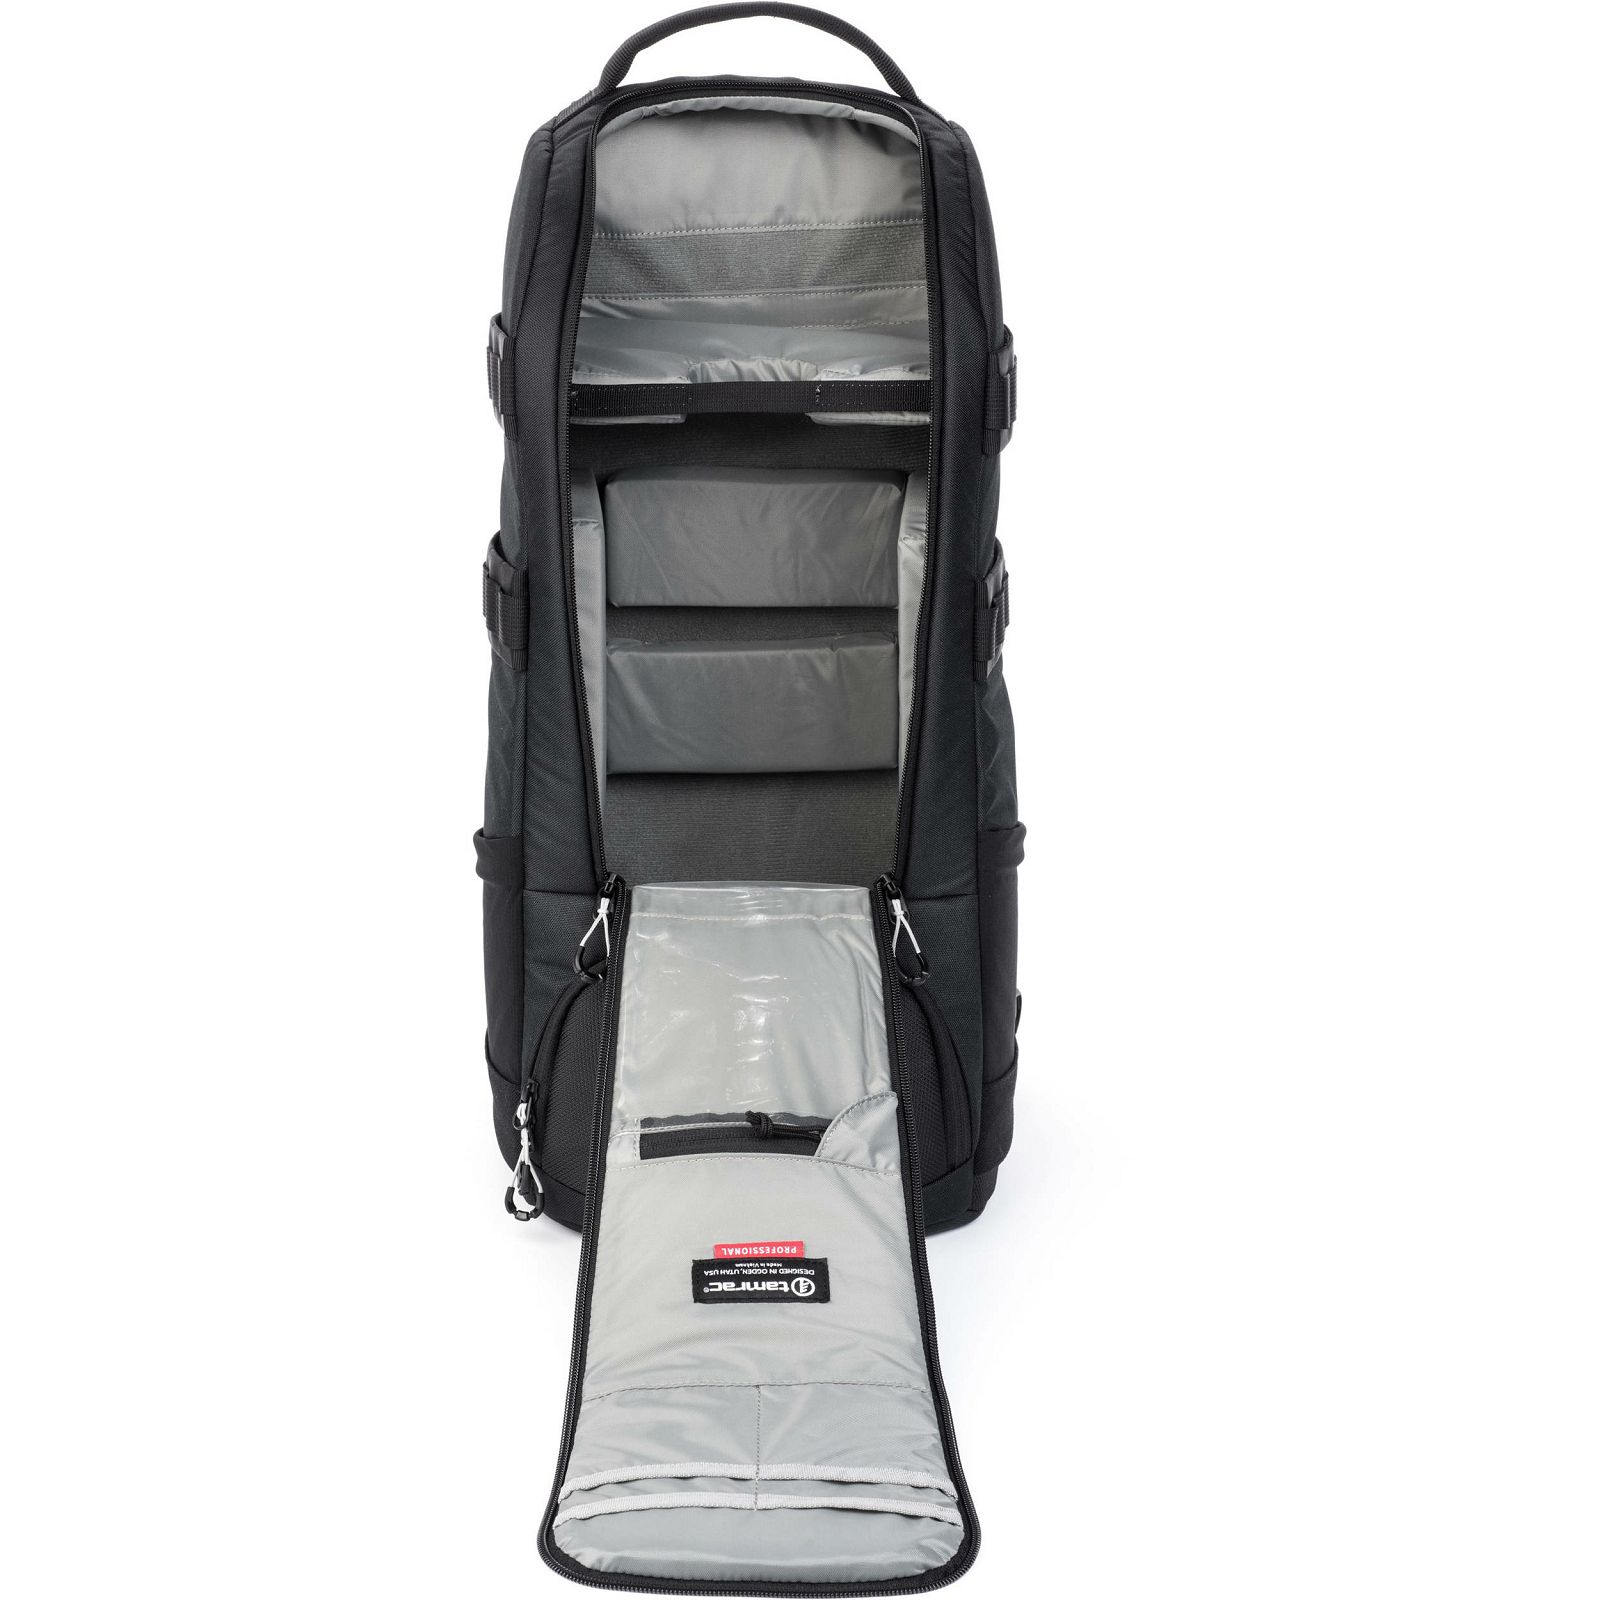 Tamrac Anvil Super 25 Backpack Black crni ruksak za foto opremu (T0280-1919)